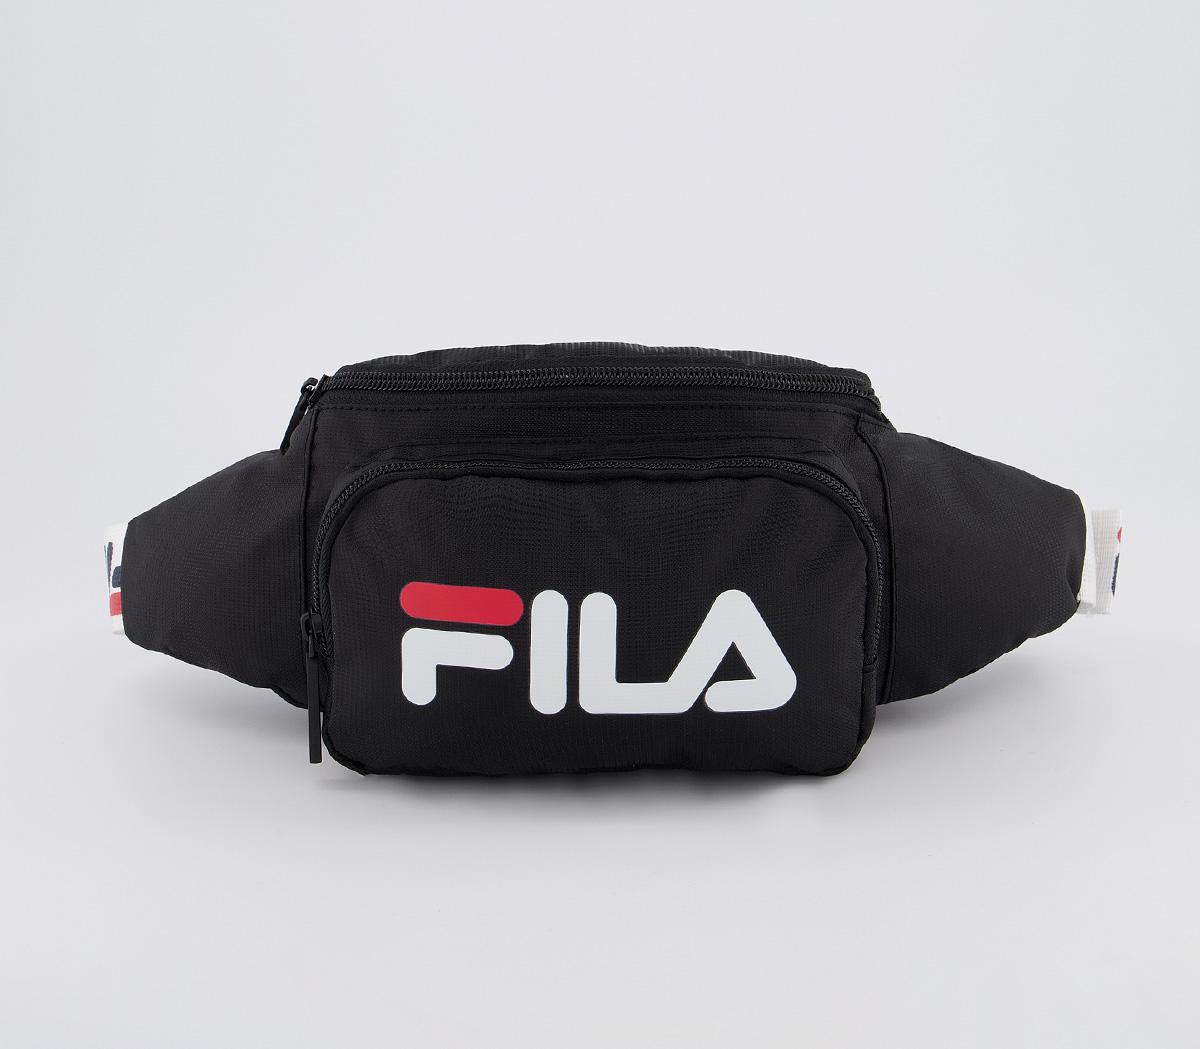 fila belt bag black